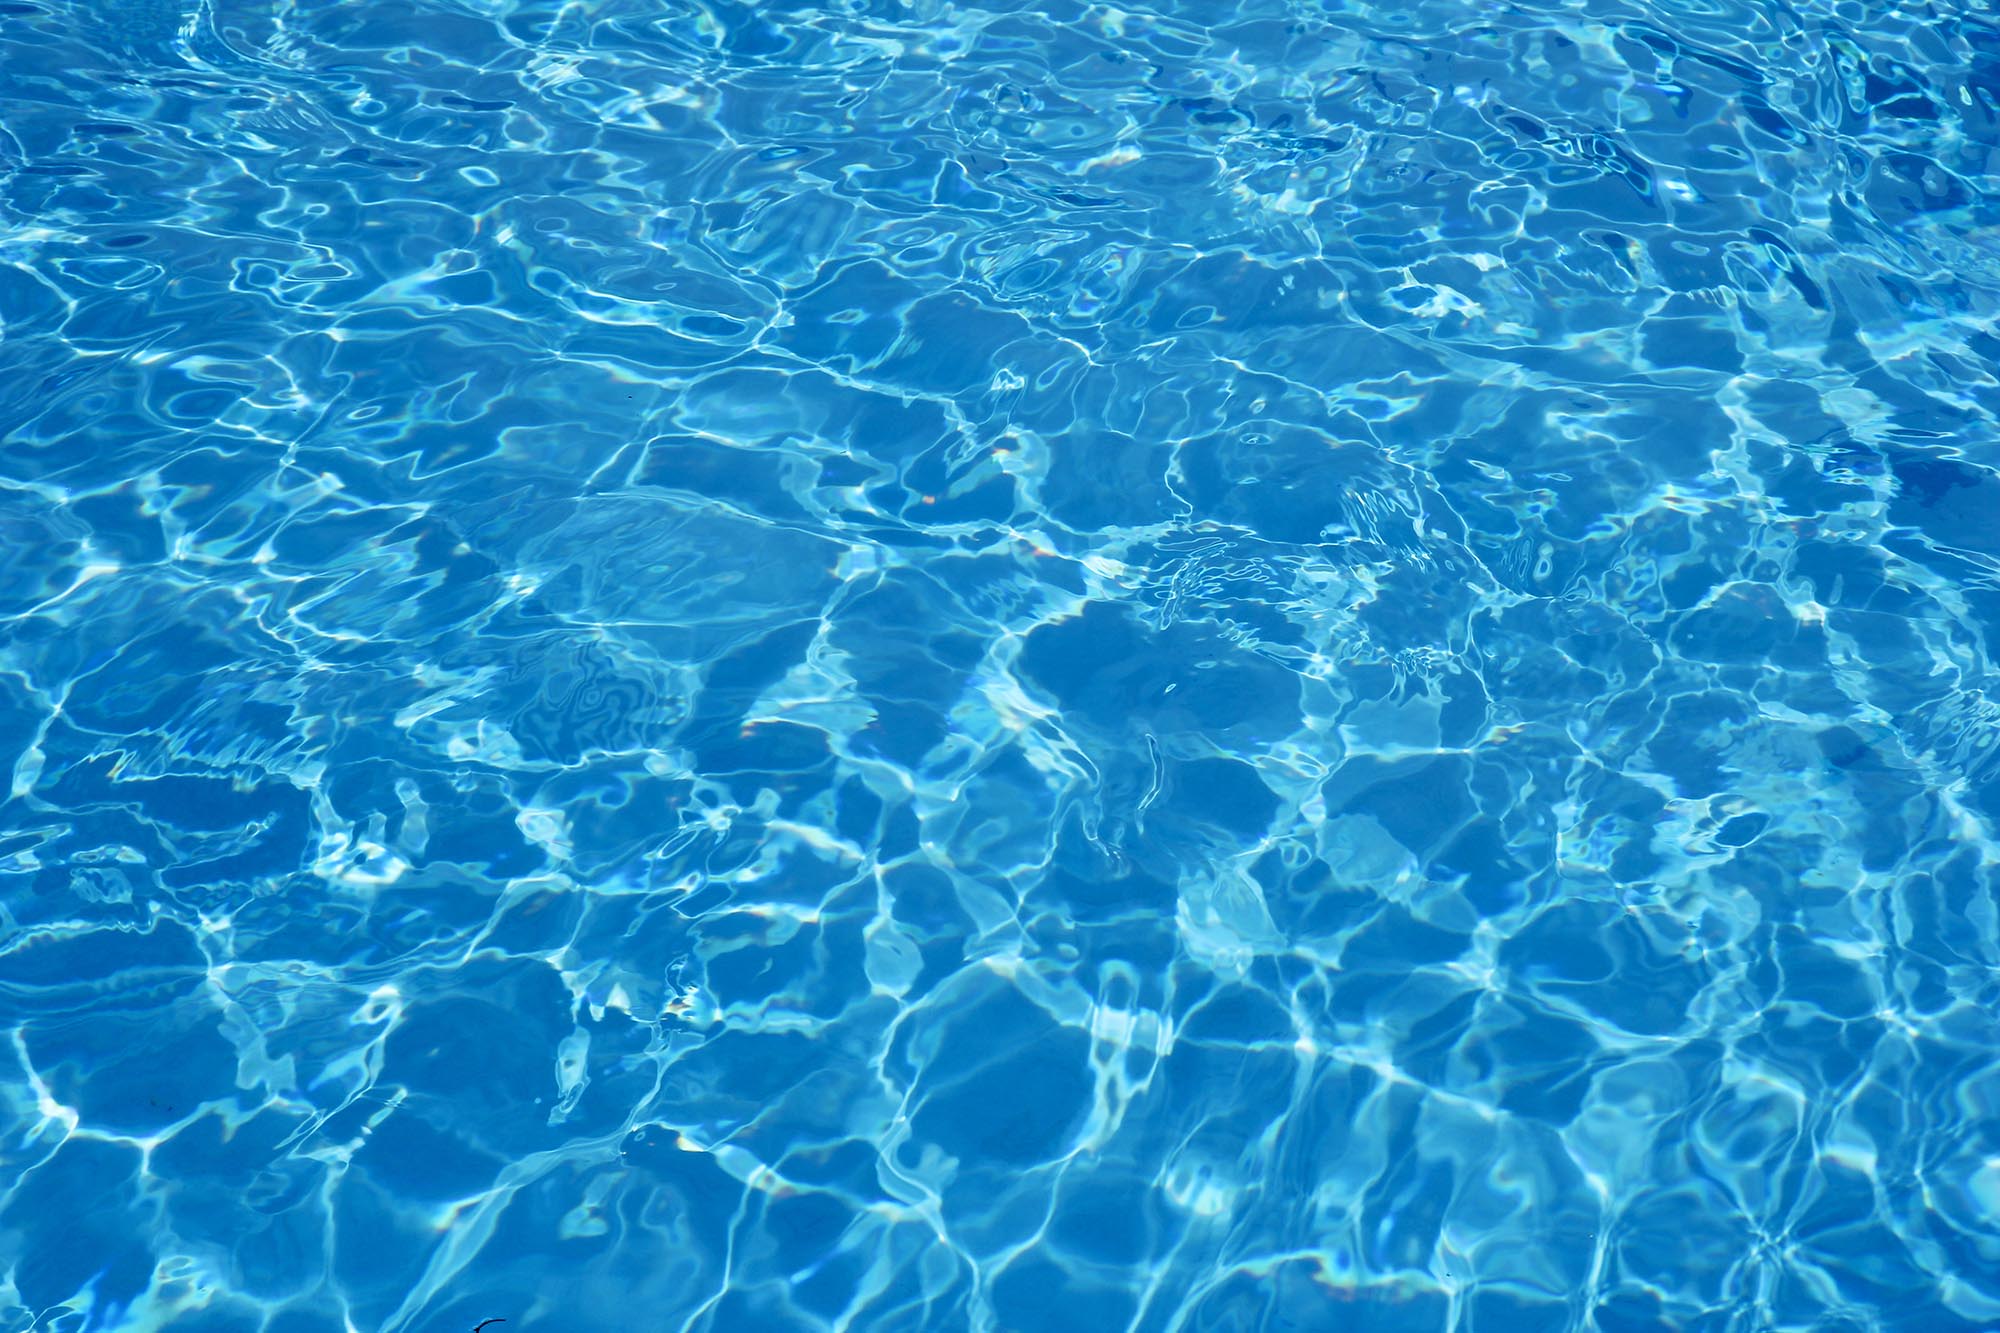 Como limpar piscina – Principais cuidados